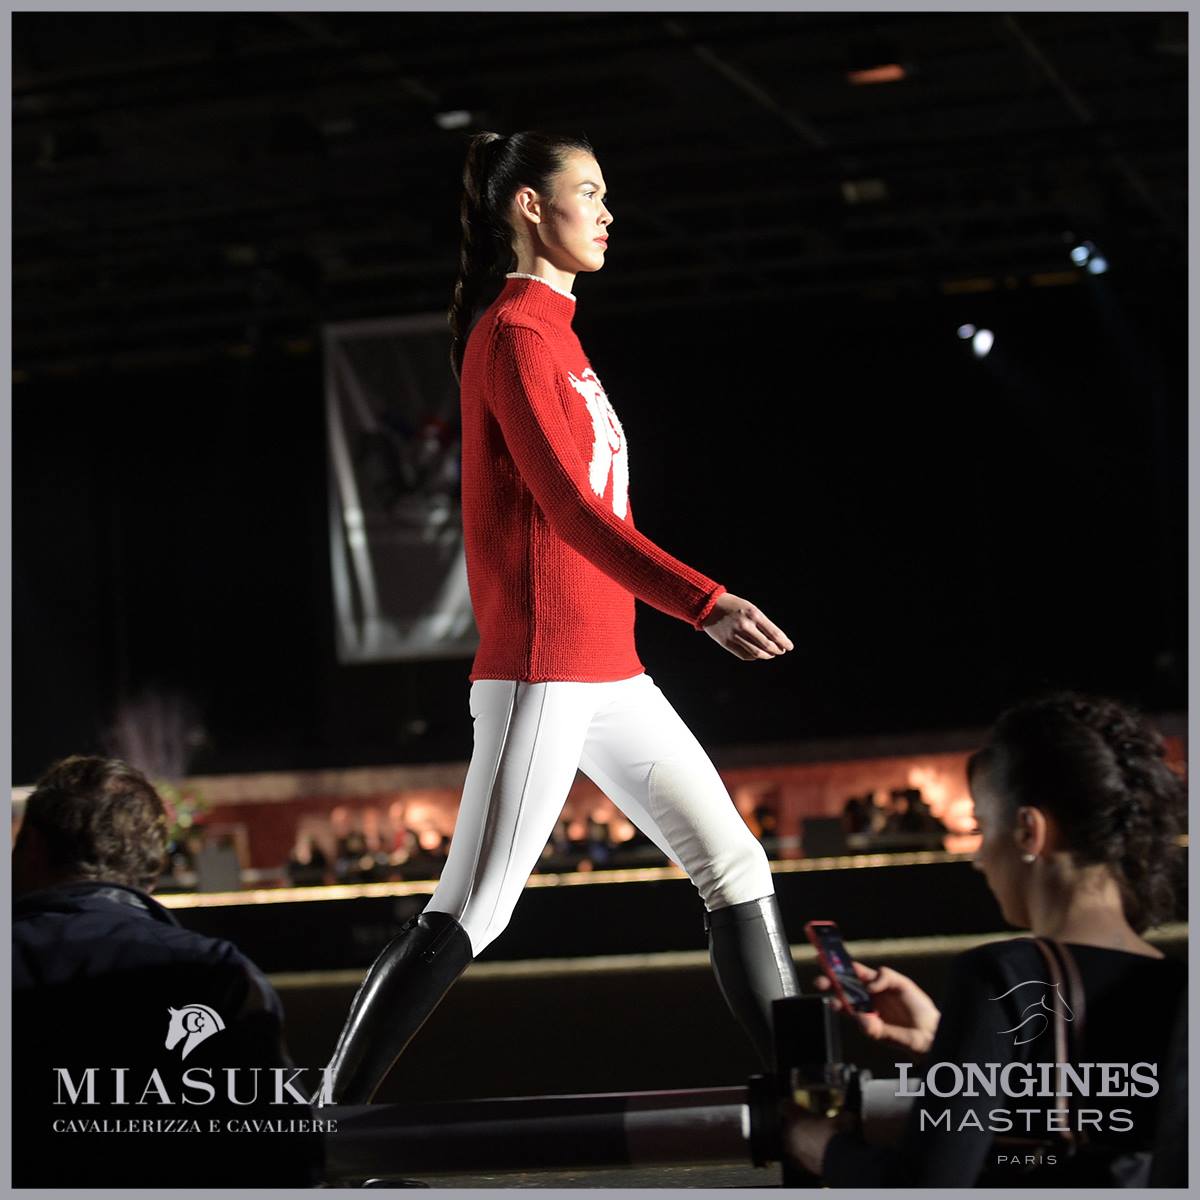 Miasuki - Equestrian Clothing Fashion Show 25104-miasuki---equestrian-clothing-fashion-show.jpg